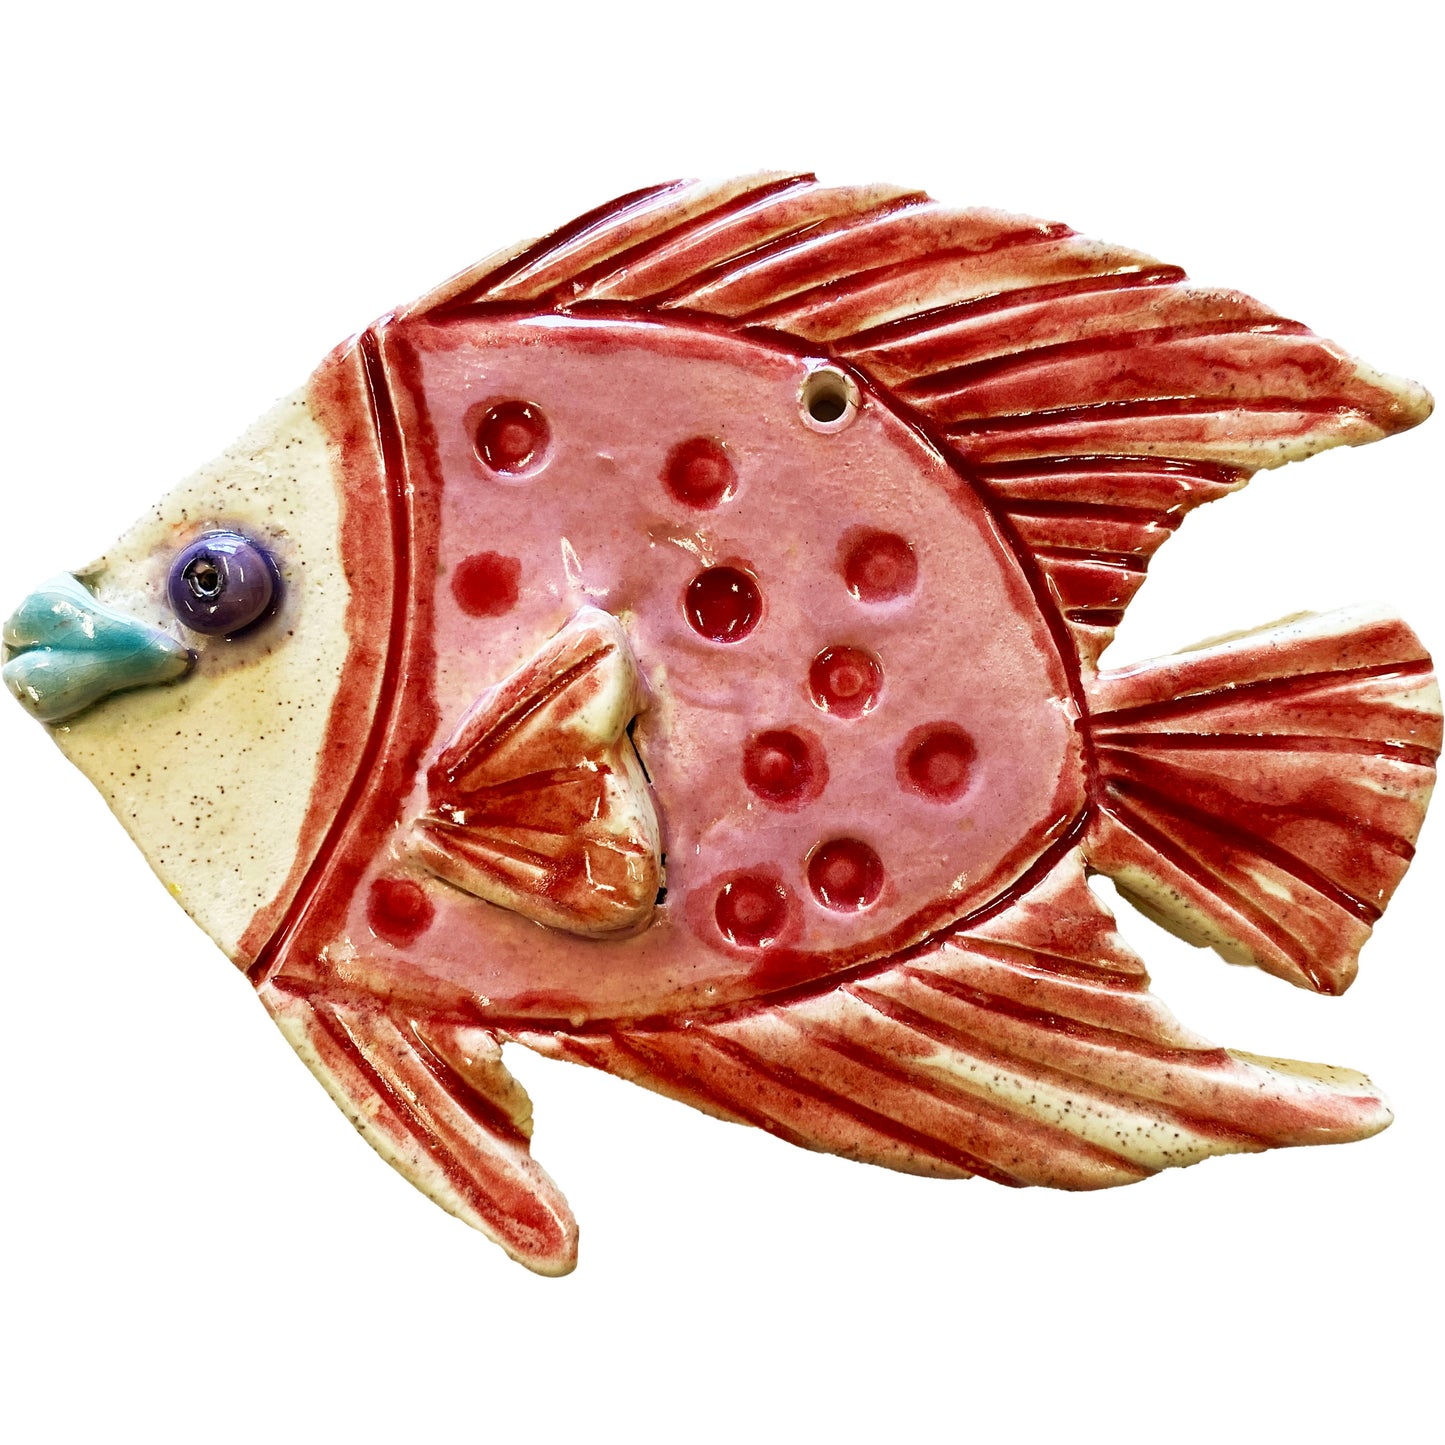 Ceramic Arts Handmade Clay Crafts Fresh Fish Glazed 5.5-inch x 4.5-inch made by Jennifer Horne